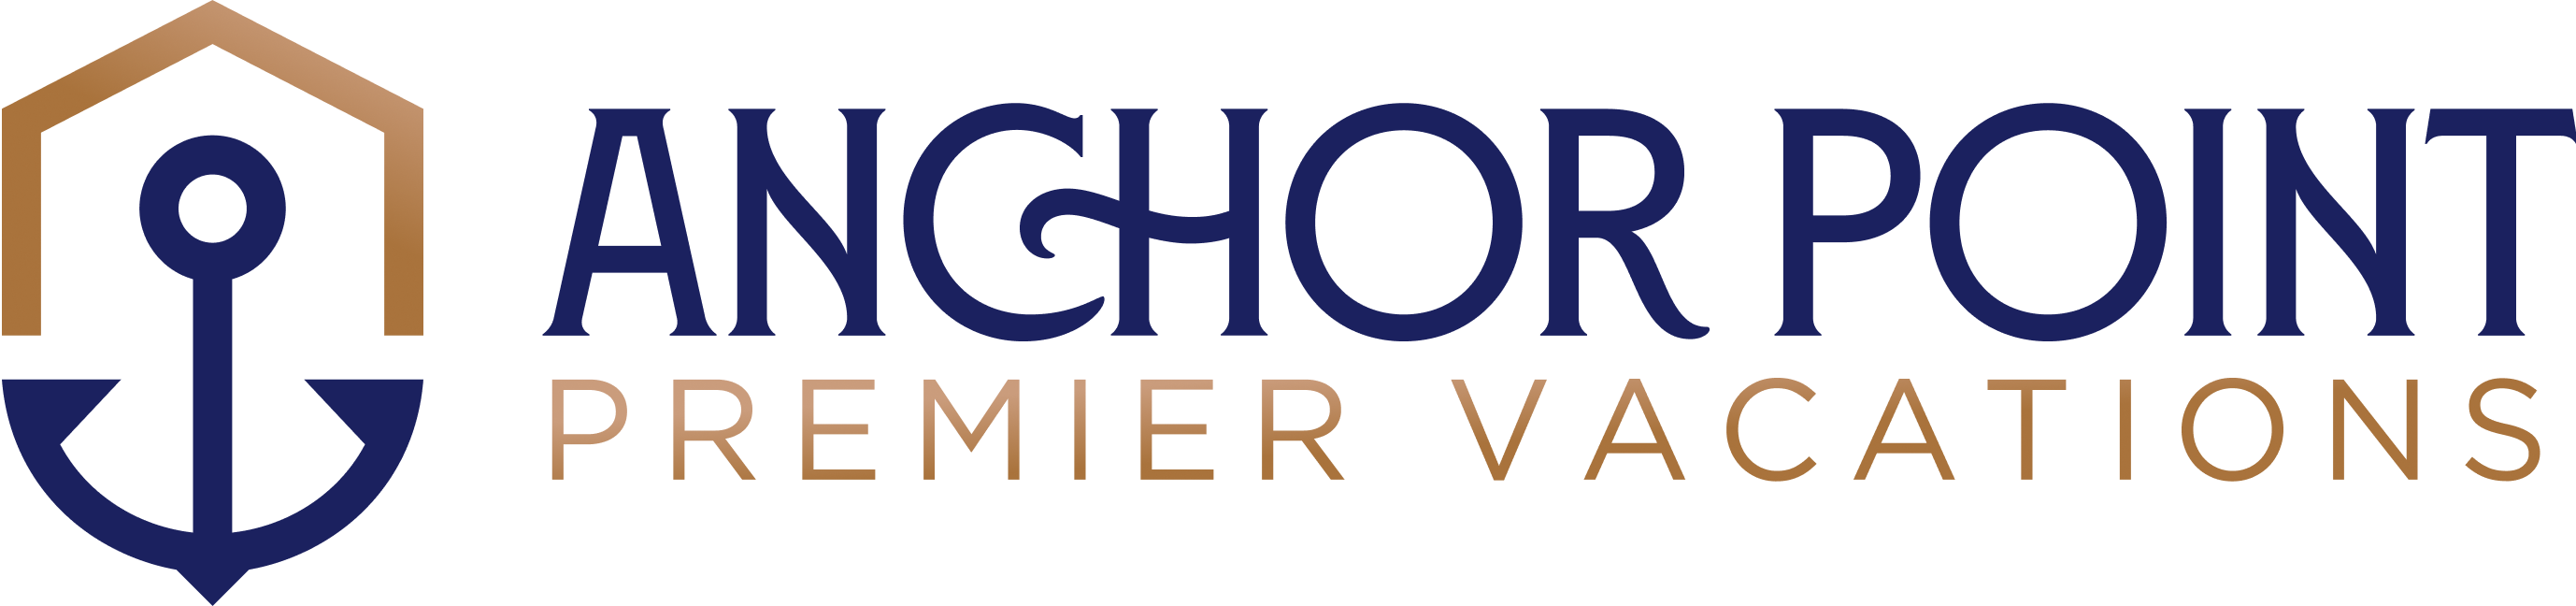 Anchor Point Premier Vacations, LLC brand logo